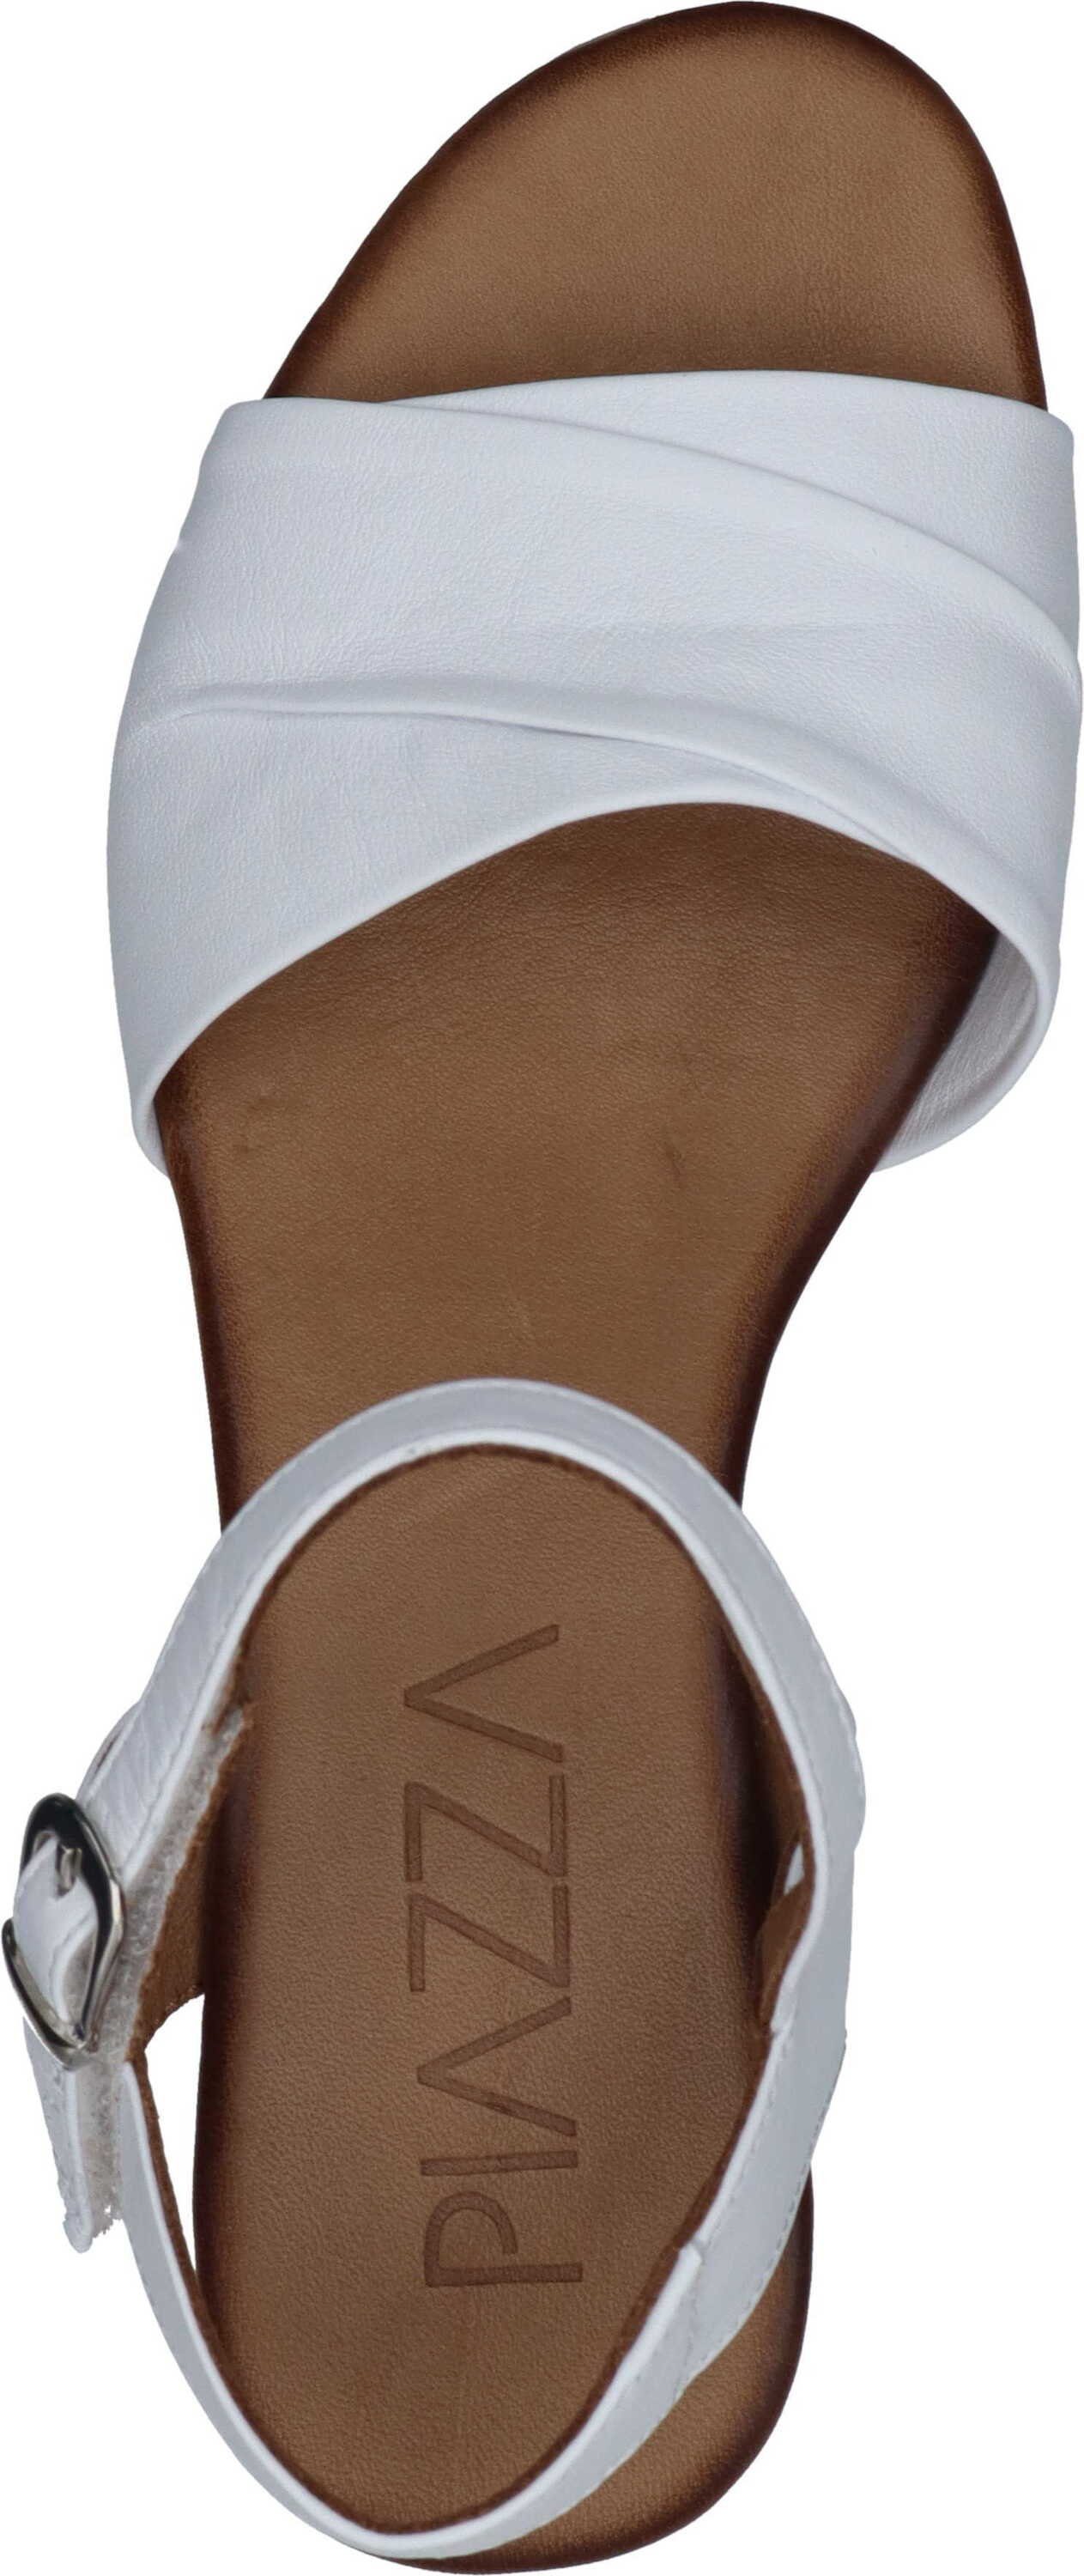 Sandalette Leder Piazza Sandalen echtem aus weiß